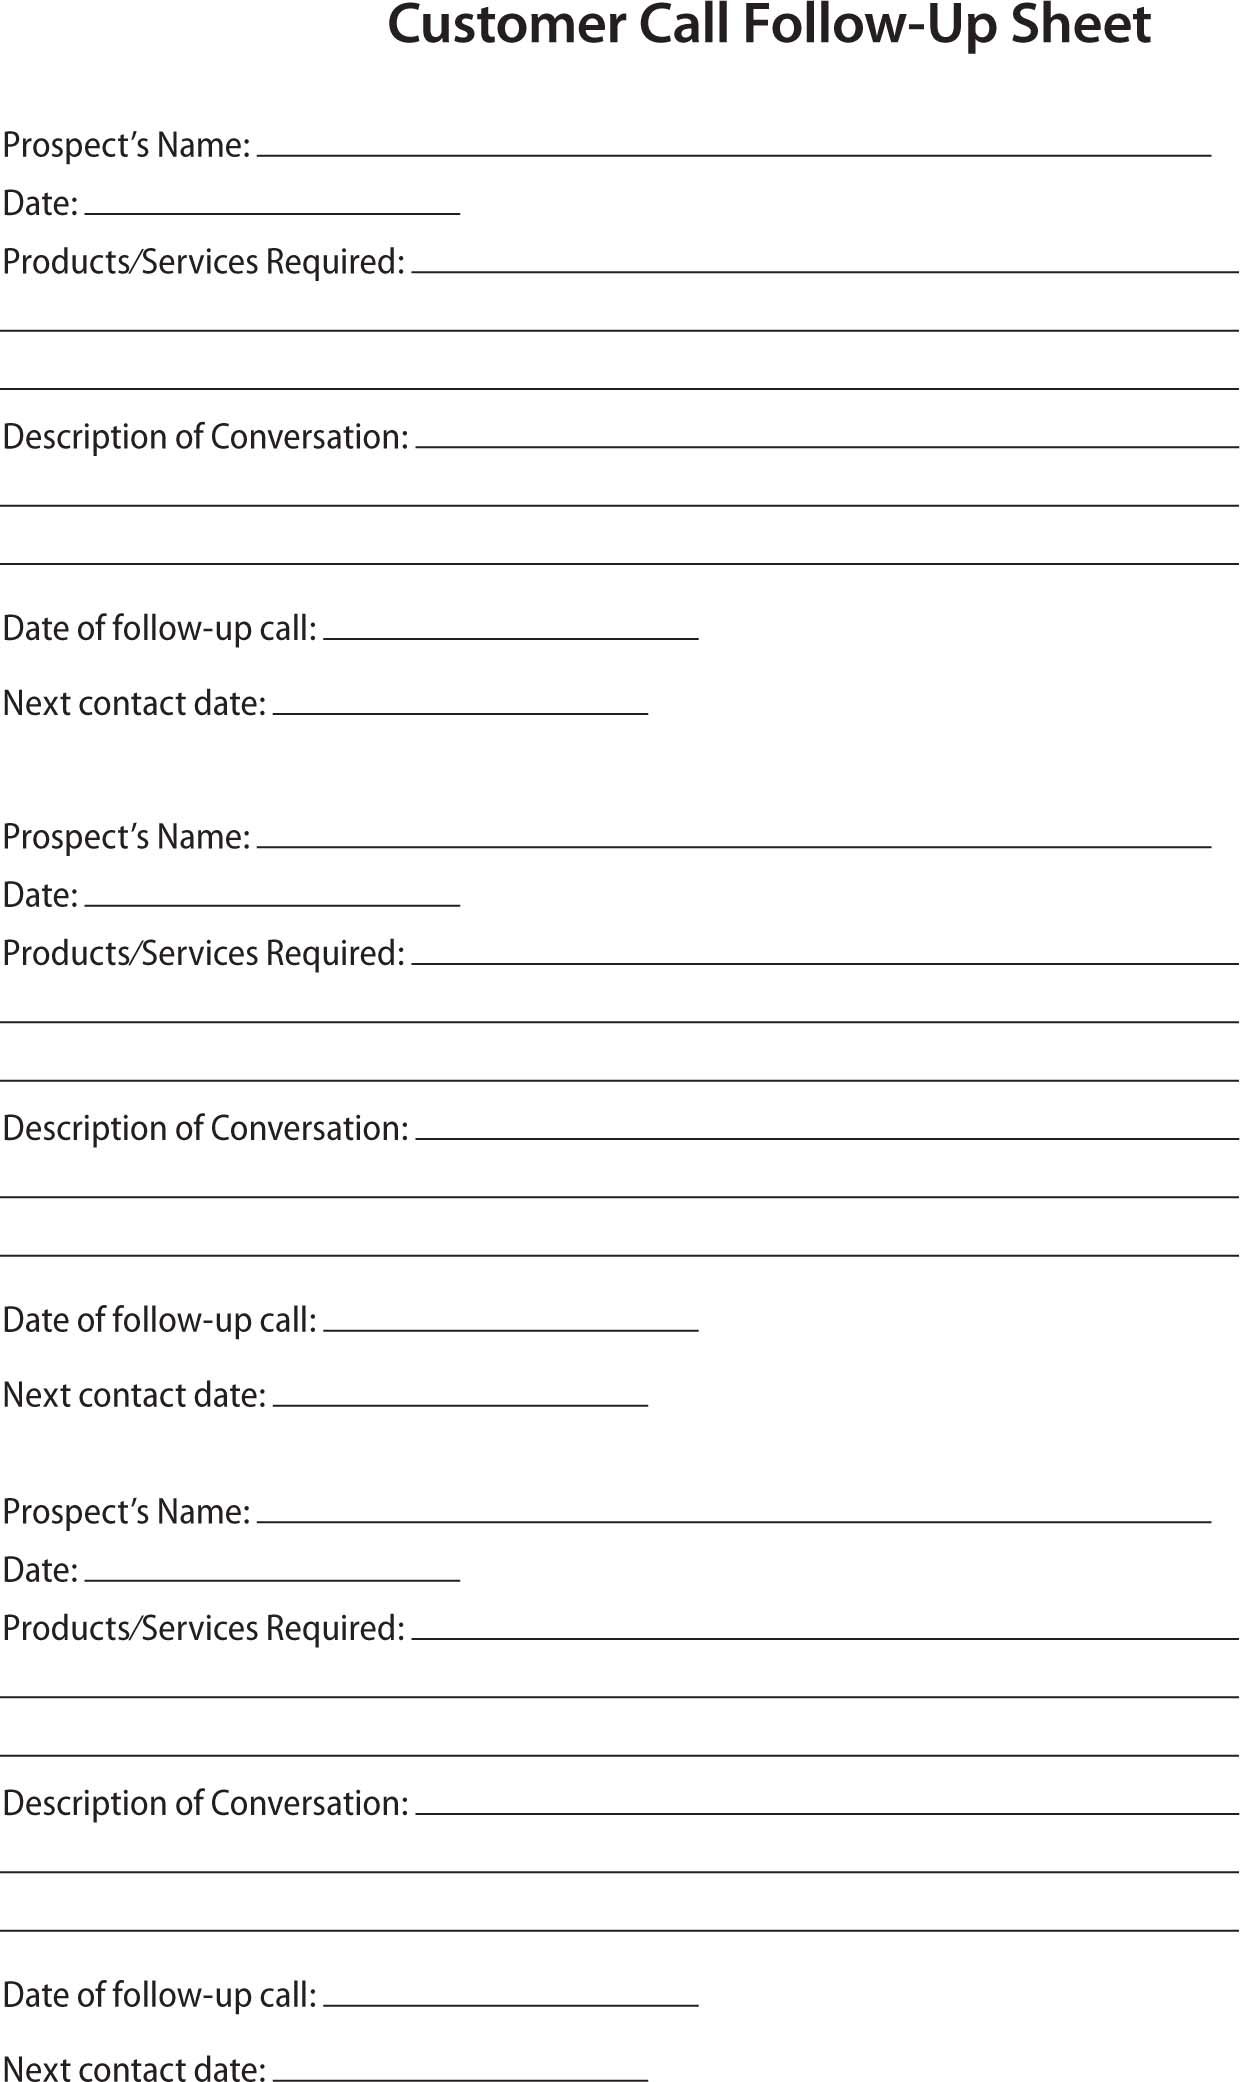 80 20 Prospect Sheet Customer Call Follow Up | Templates For Customer Contact Report Template